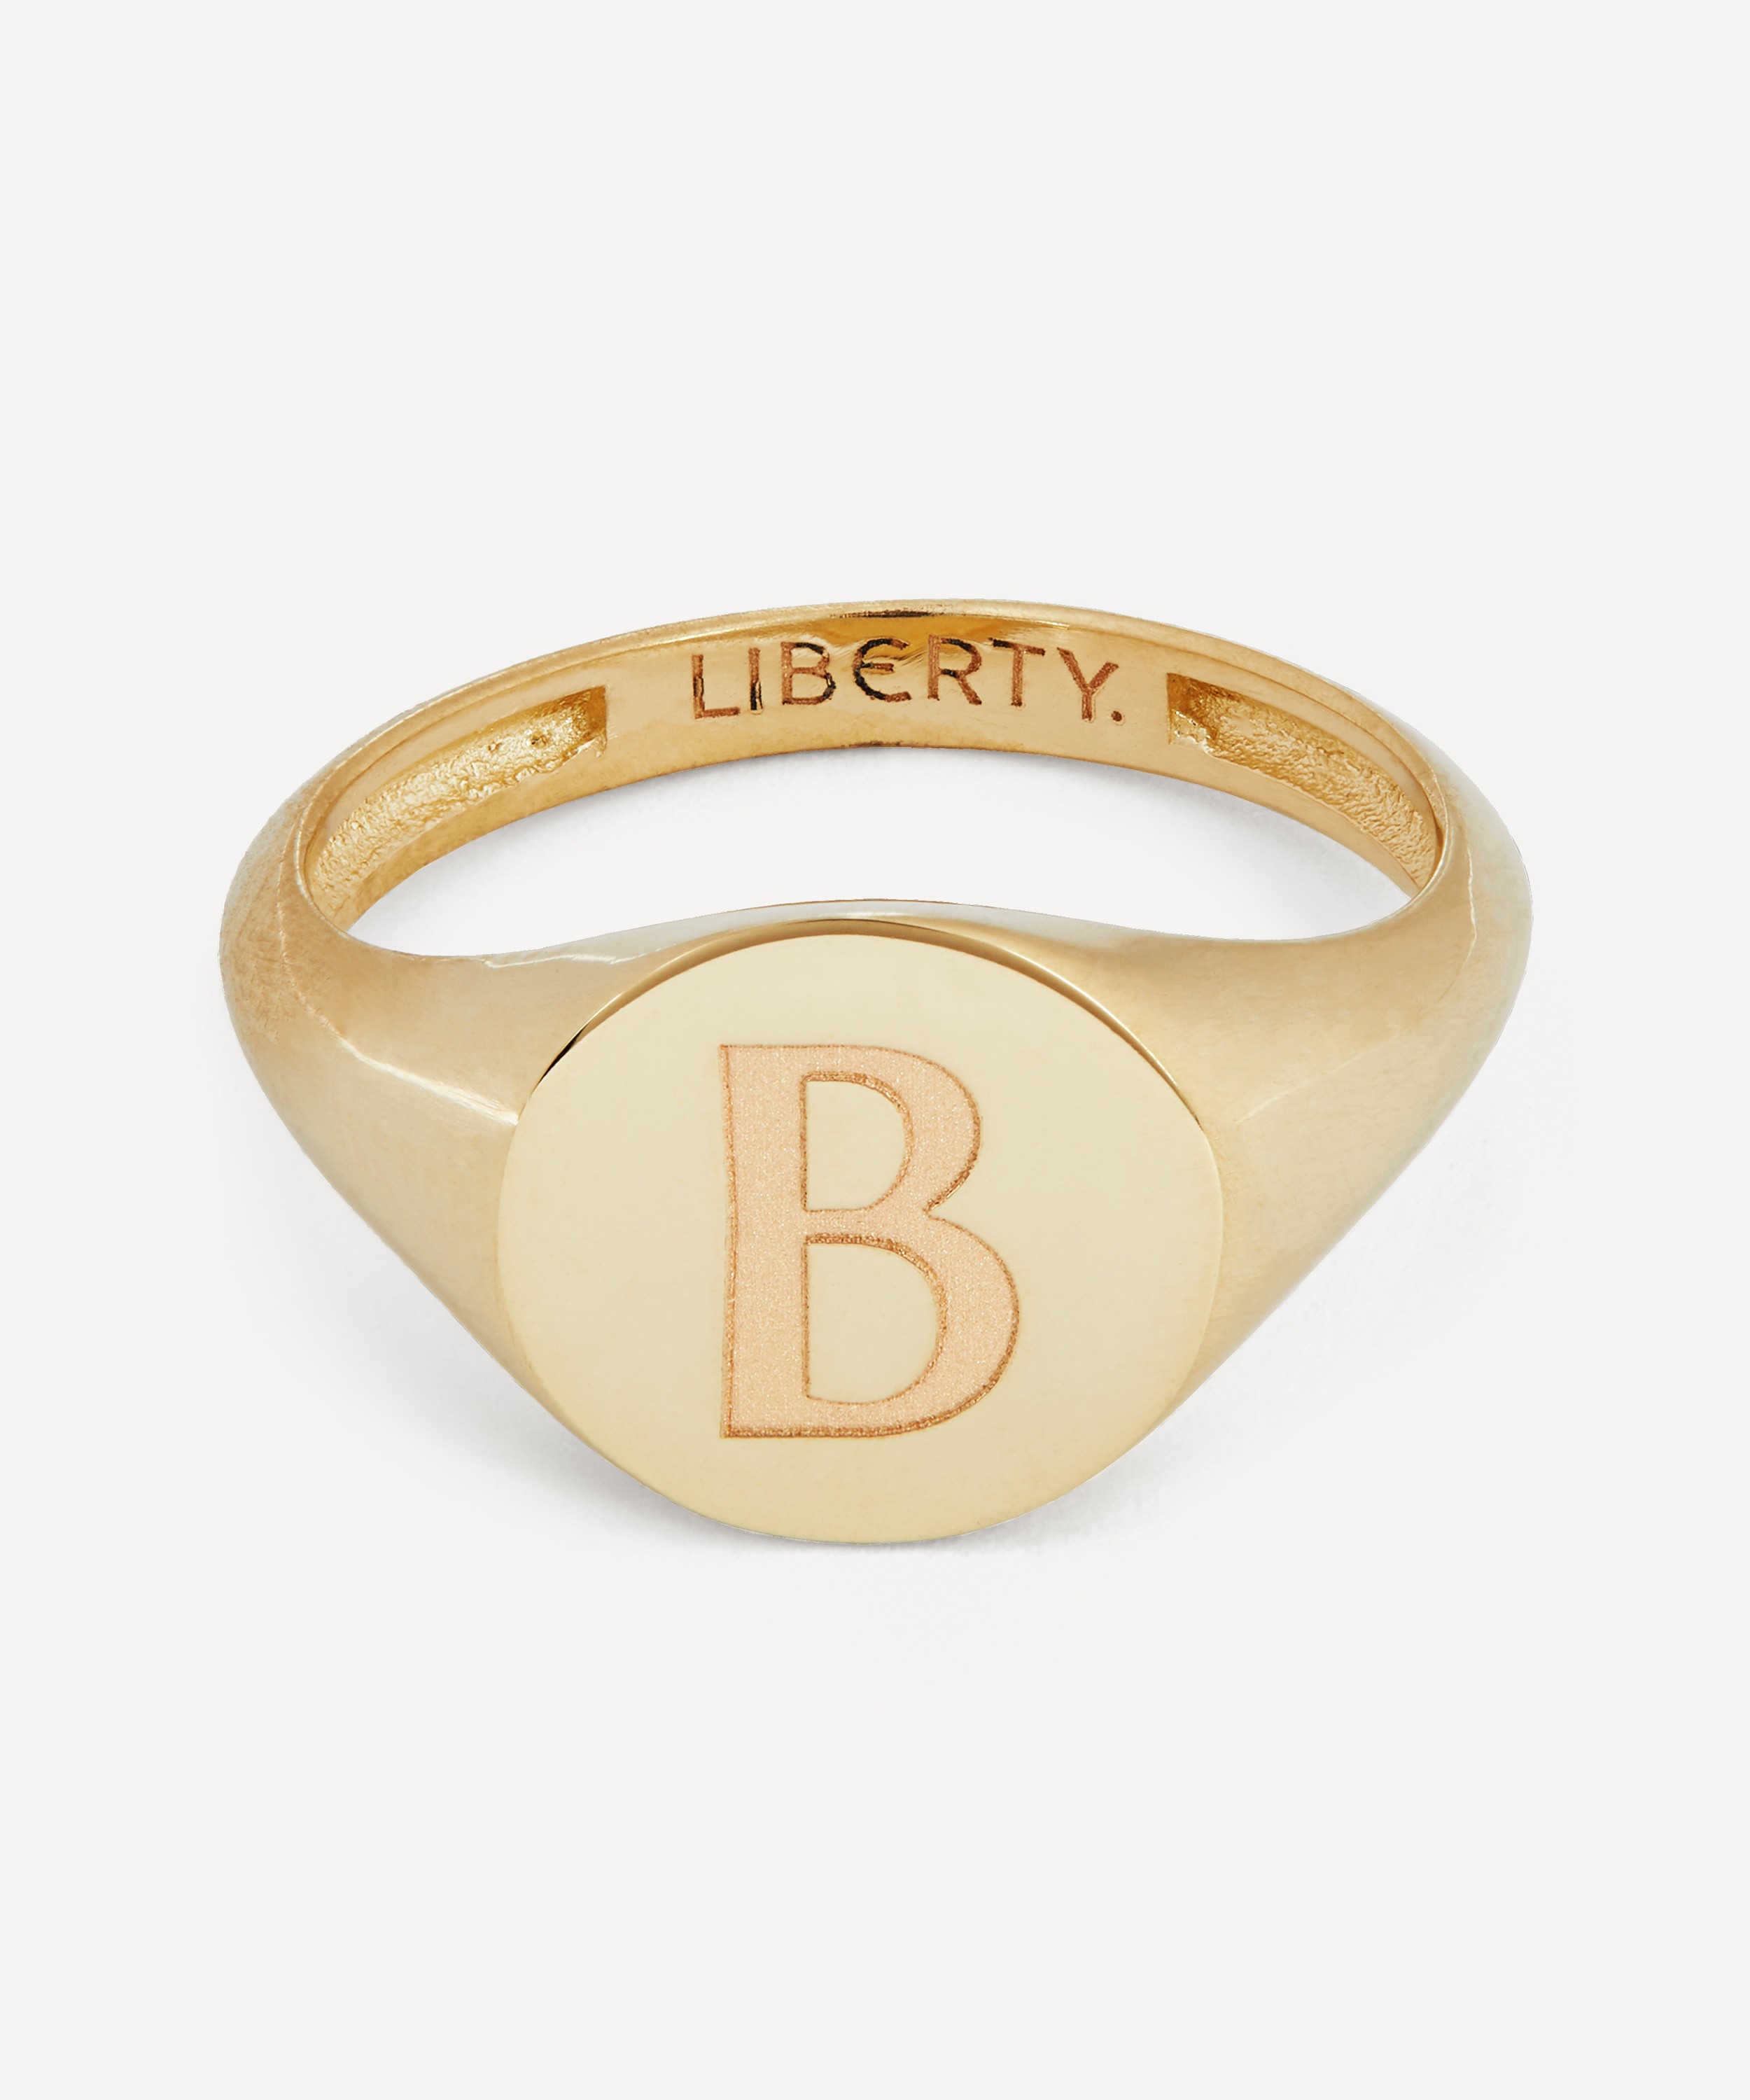 Liberty - 9ct Gold Initial Liberty Signet Ring - B